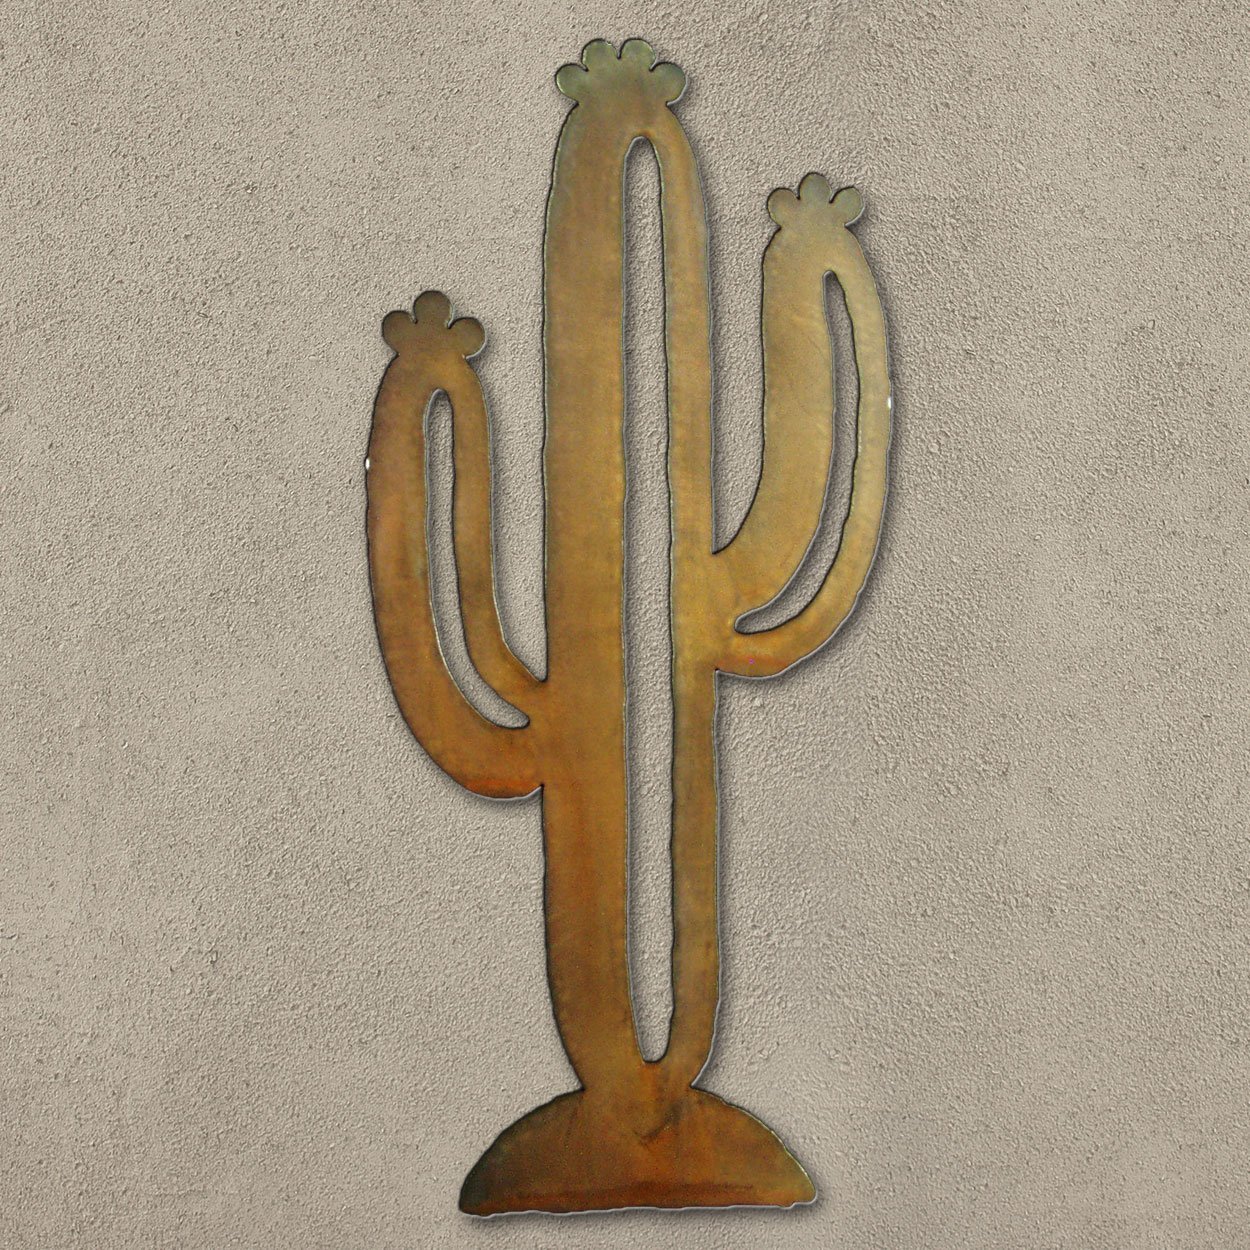 165253 - 24in Saguaro Cactus 3D Southwest Metal Wall Art in Rust Finish